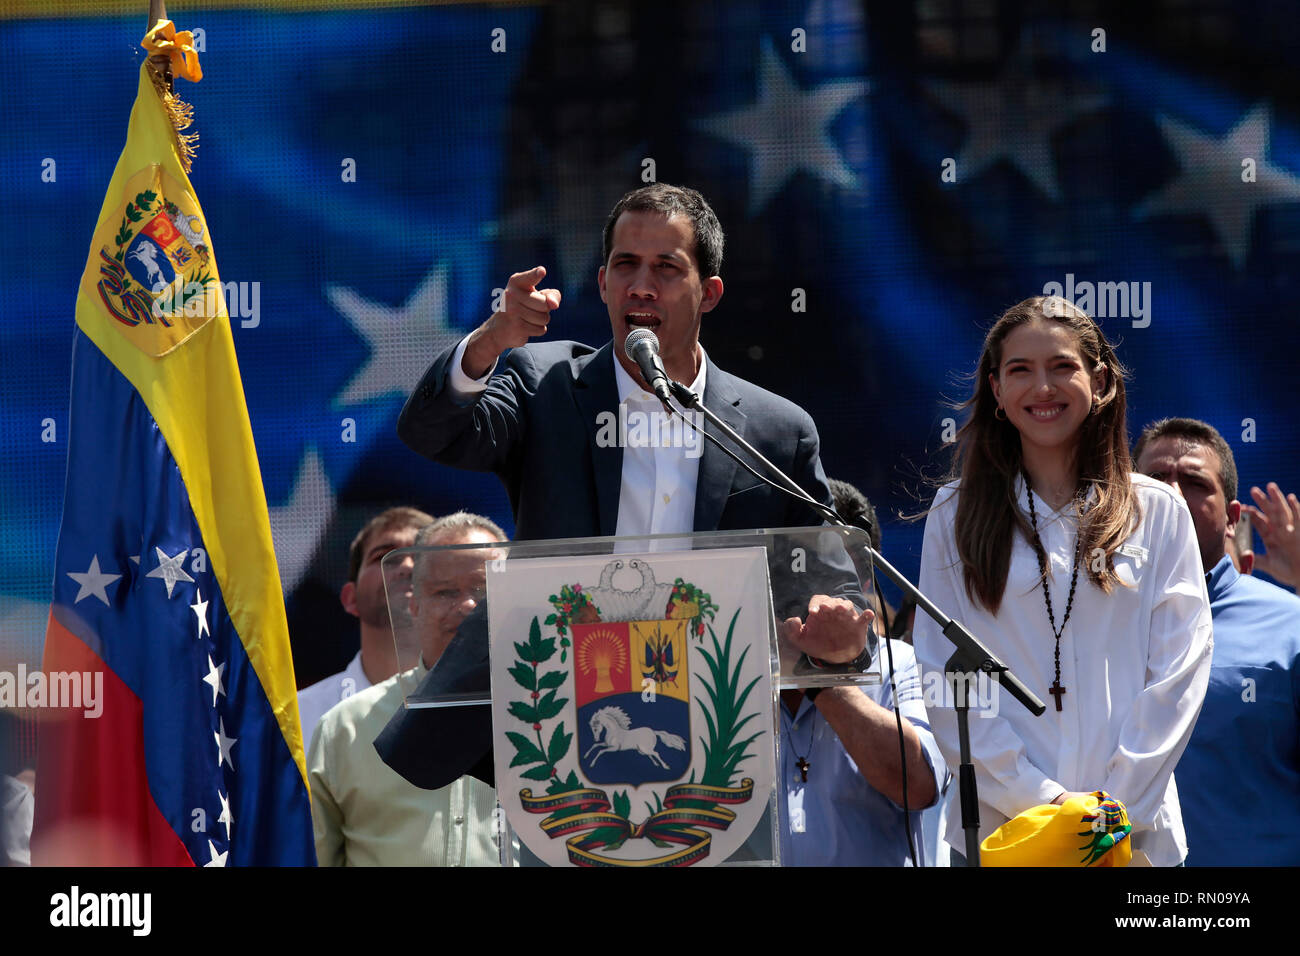 Caracas, Venezuela. 2nd Feb, 2019. Venezuelan opposition leader and self-proclaimed interim president Juan Guaido and his wife Fabiana Rosales react d Stock Photo